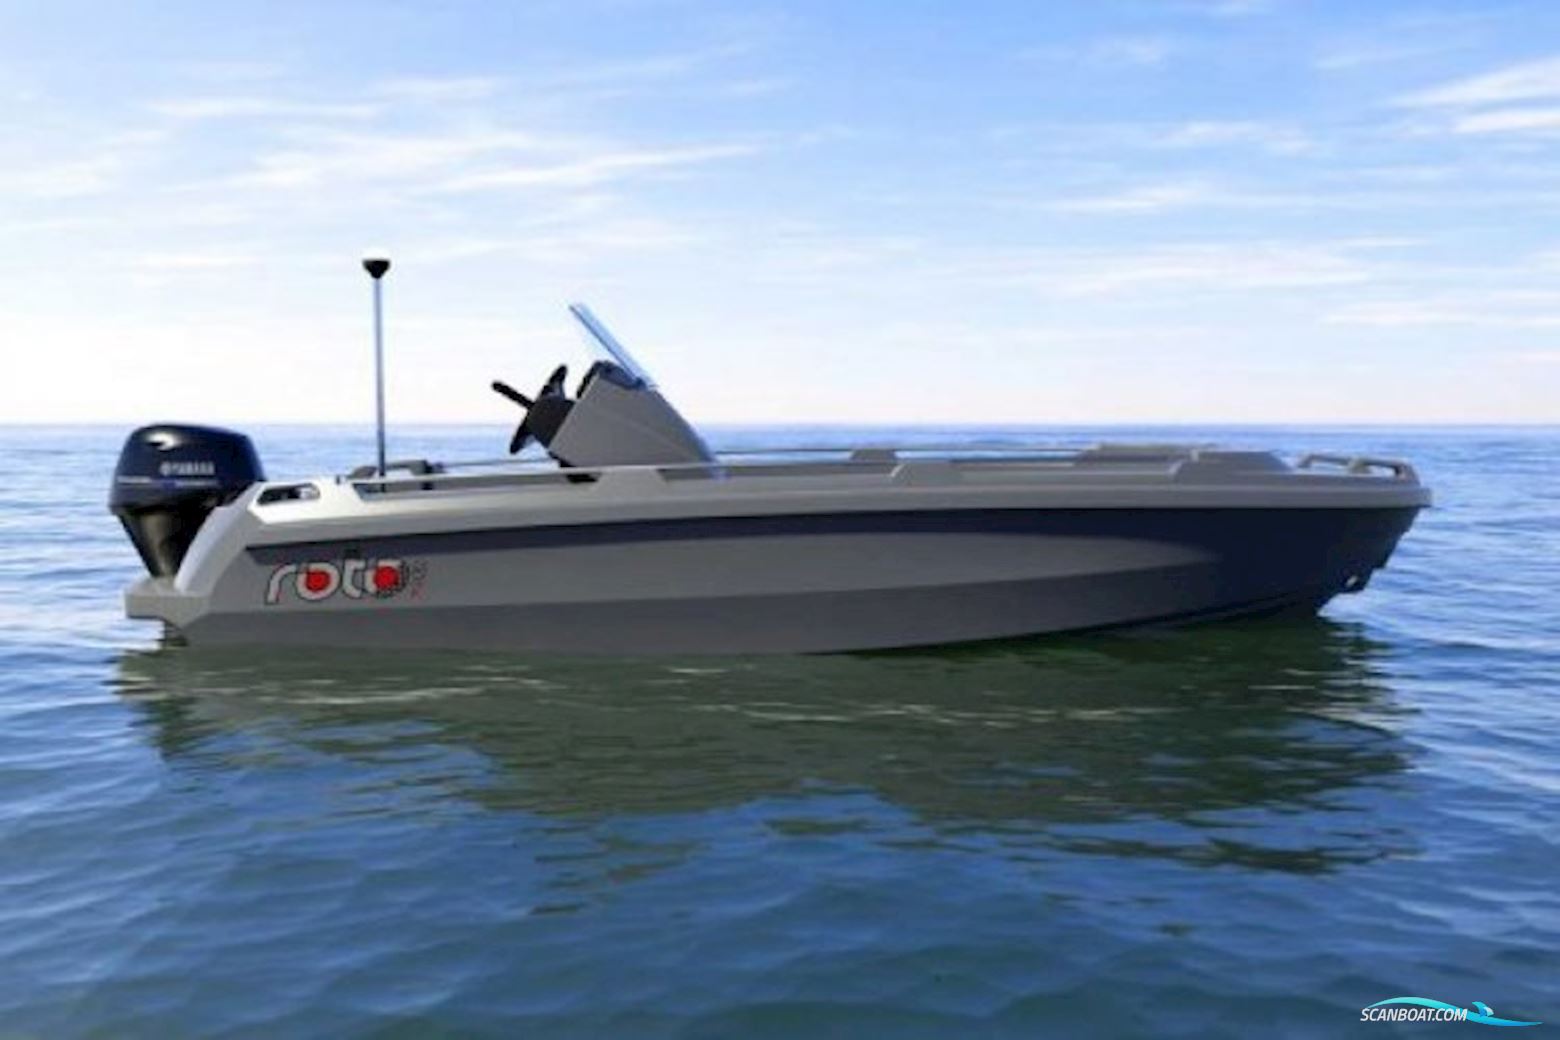 River / Roto 450 s / 460  Evolution (console) Motorboot 2023, Niederlande